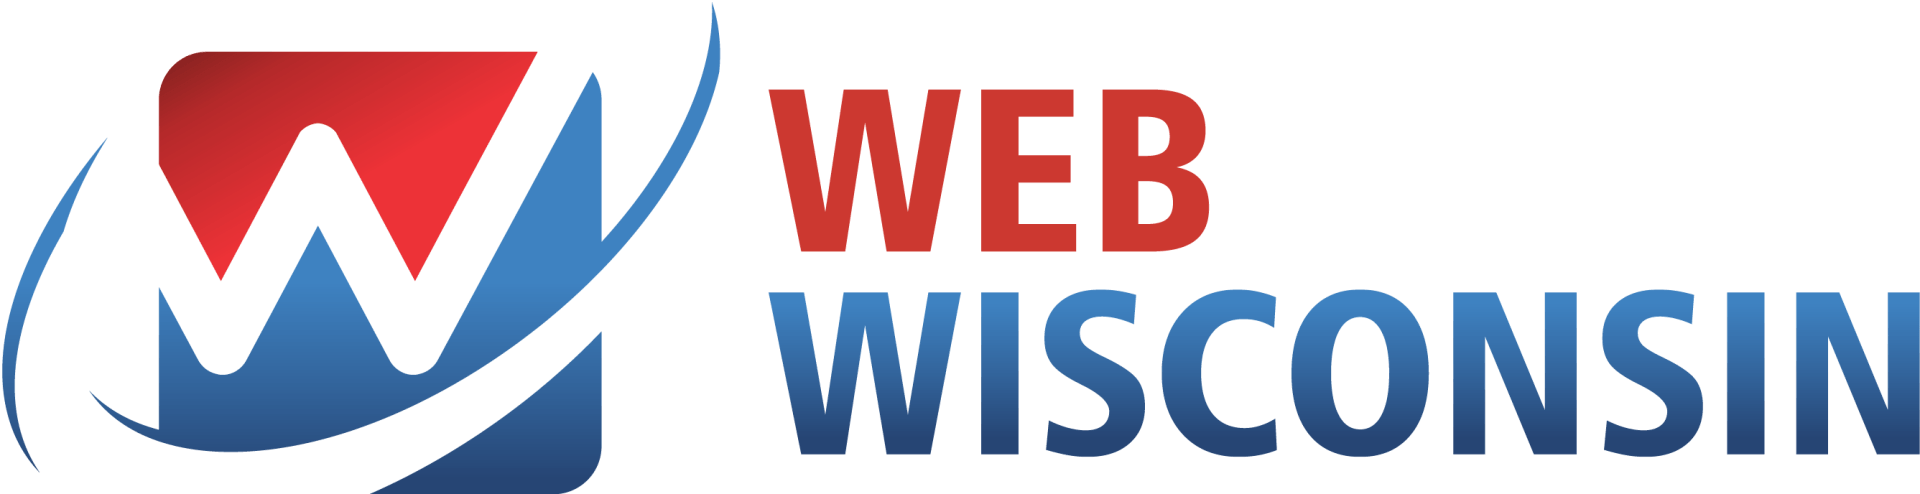 Web Wisconsin Digital Marketing & Design of Columbus, Wisconsin